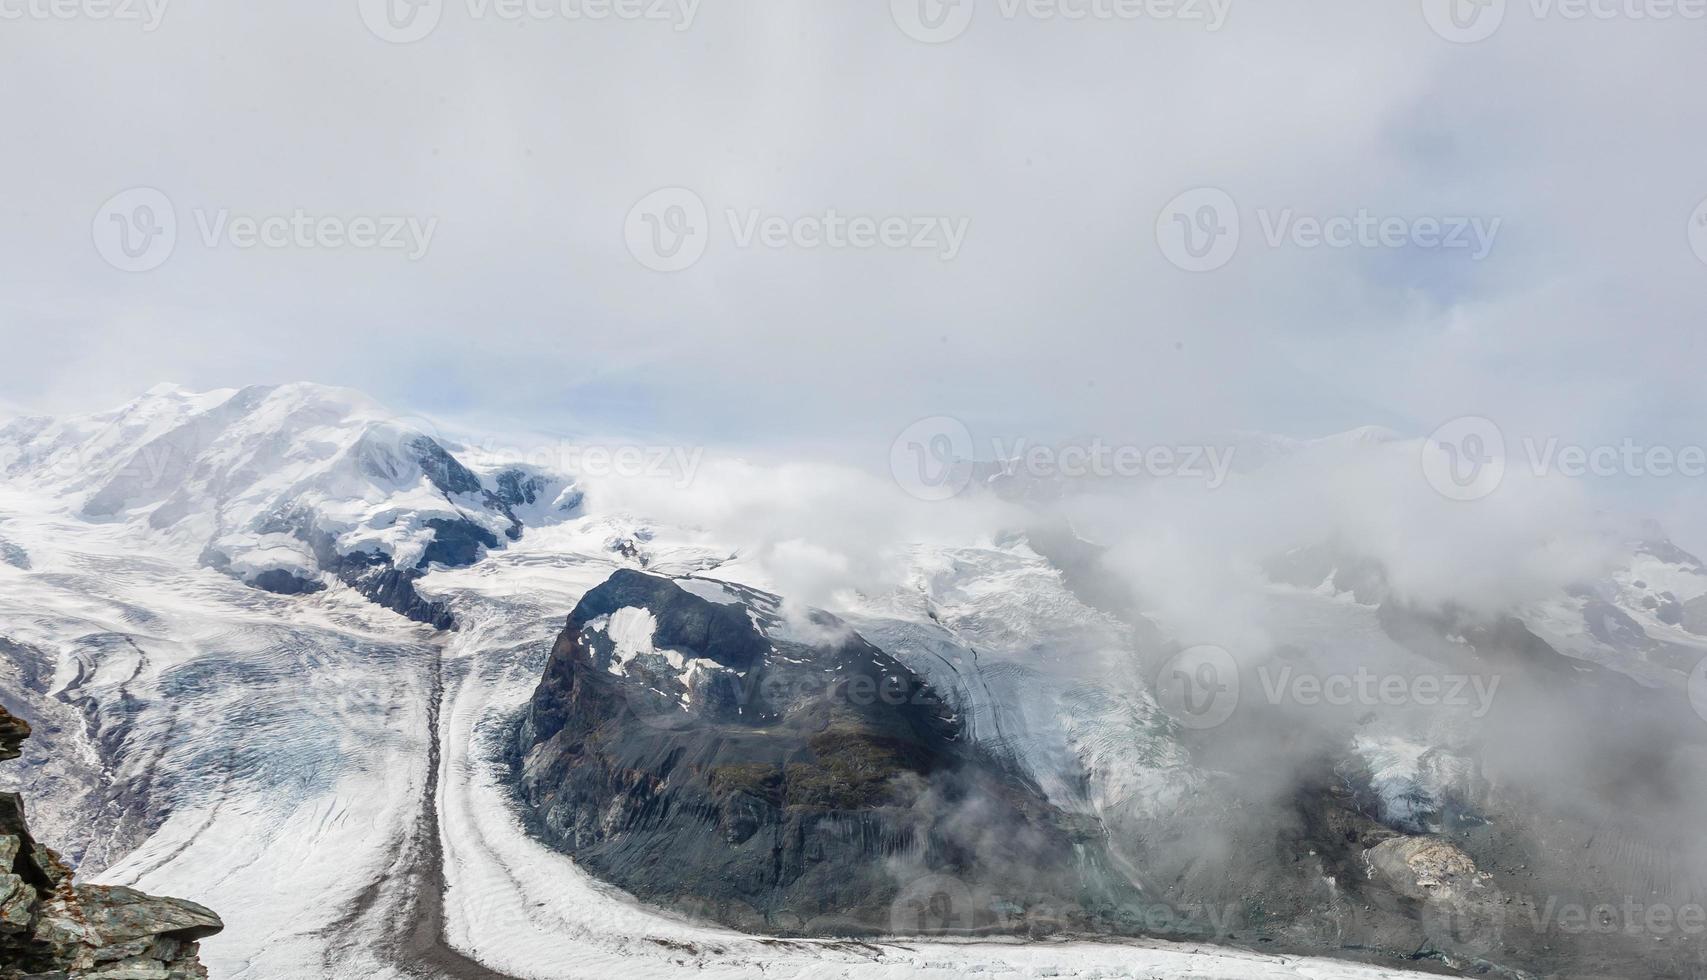 panorama de superbes montagnes et glaciers au-dessus, suisse. photo